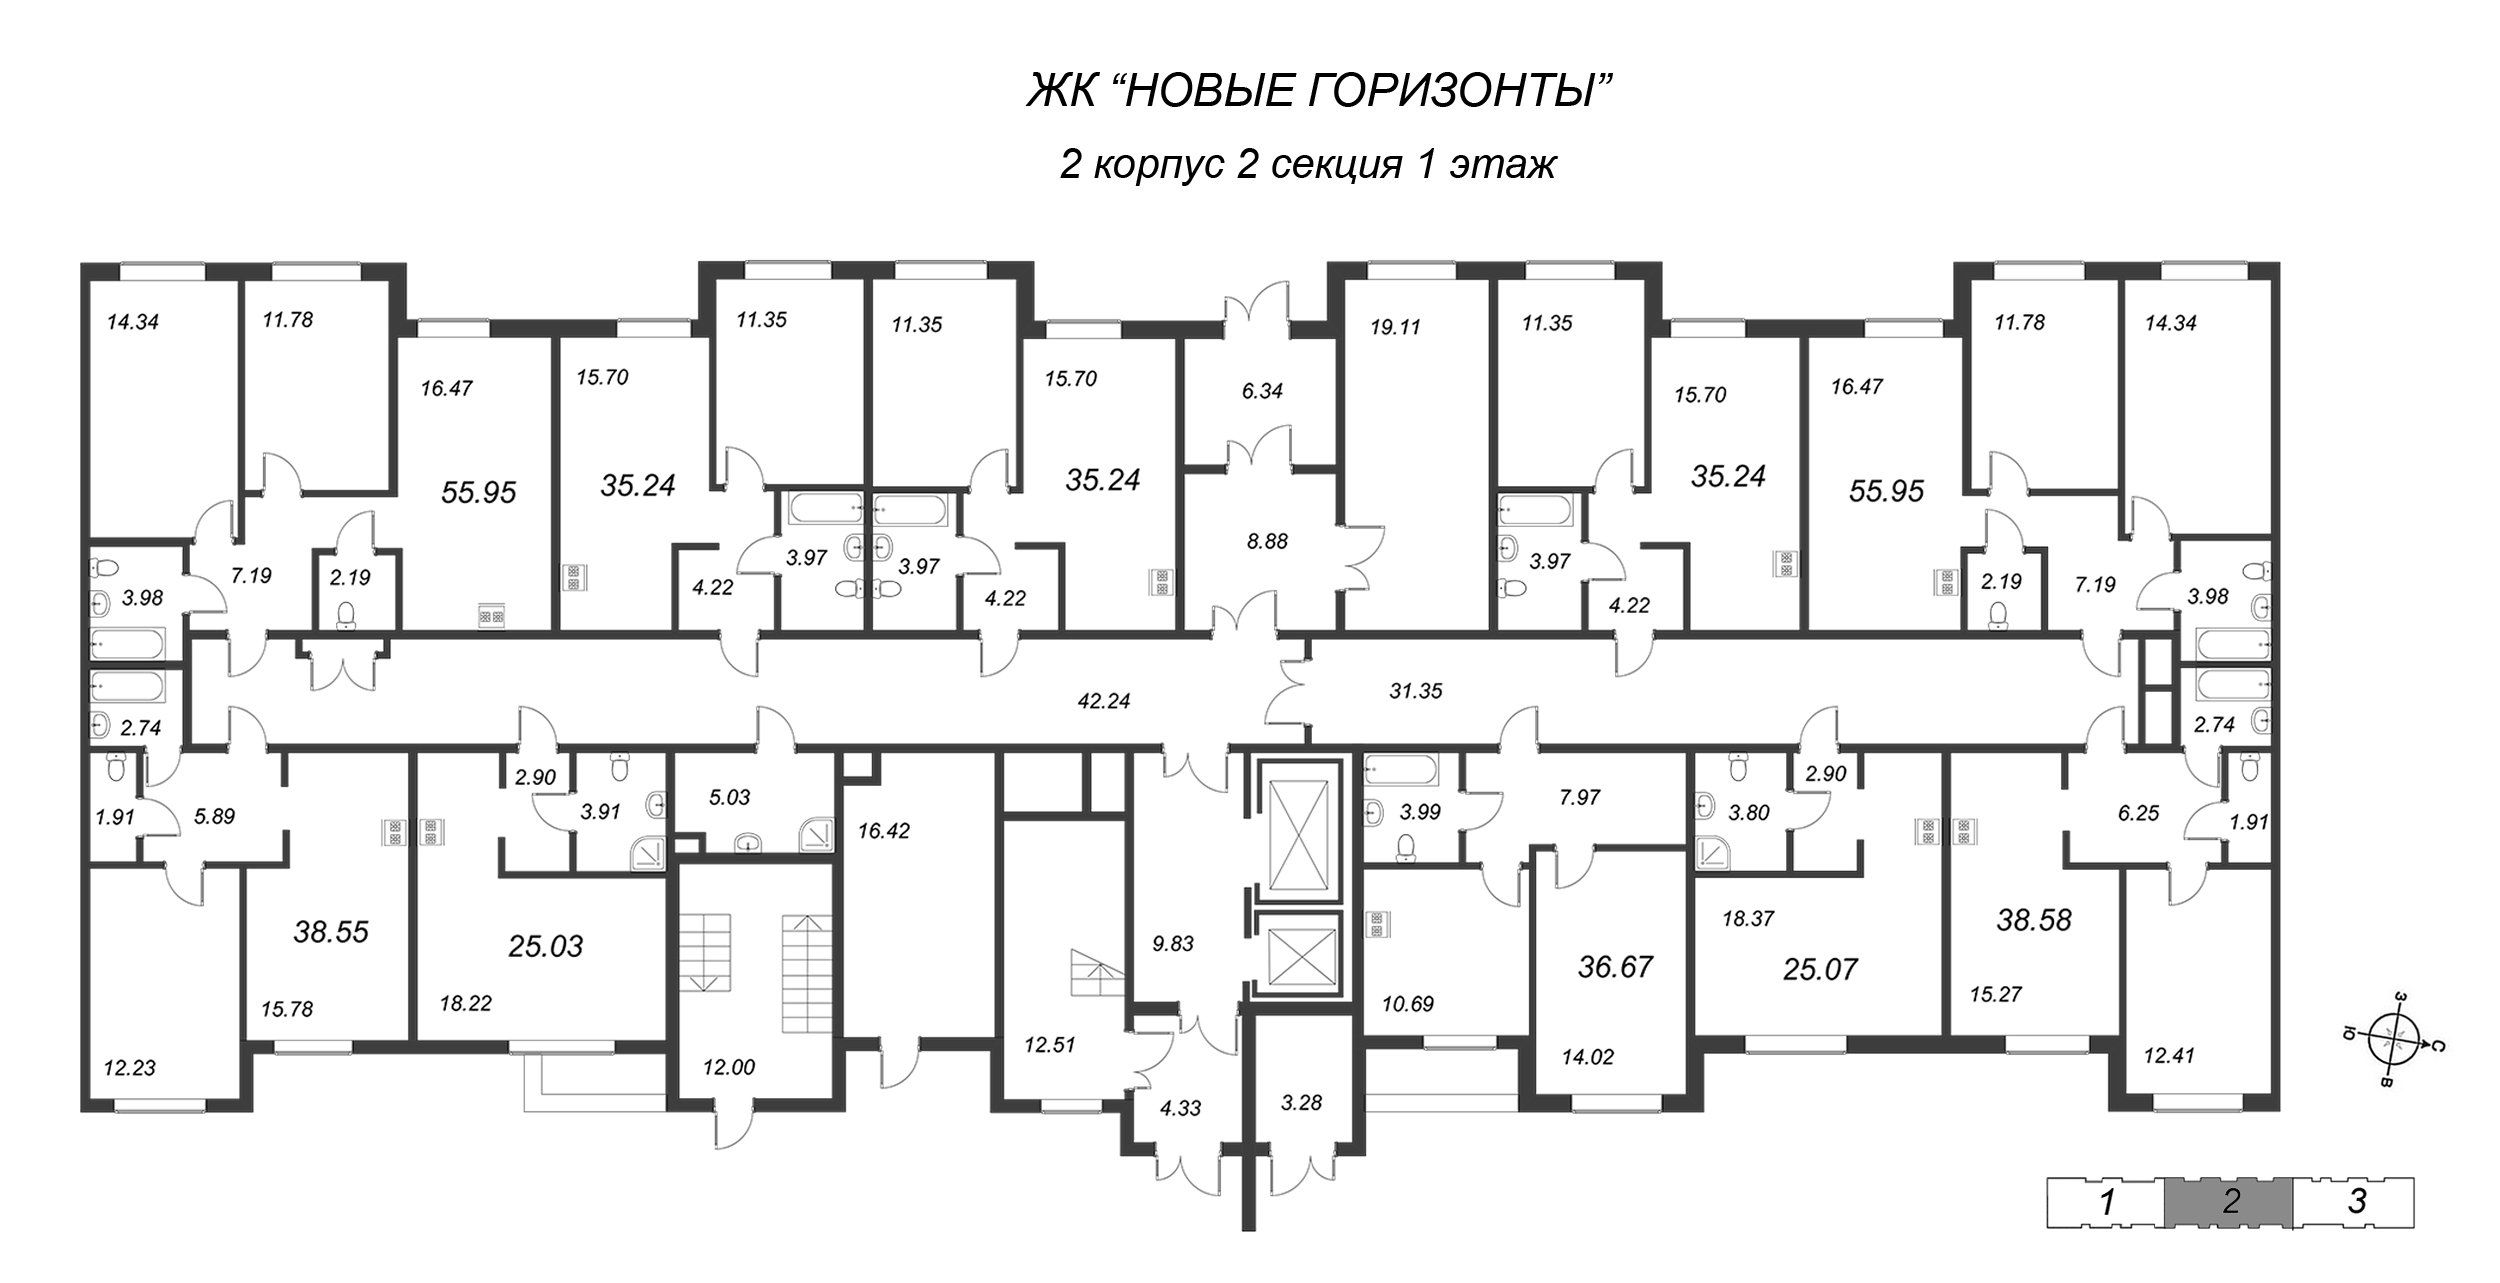 3-комнатная (Евро) квартира, 55.95 м² - планировка этажа